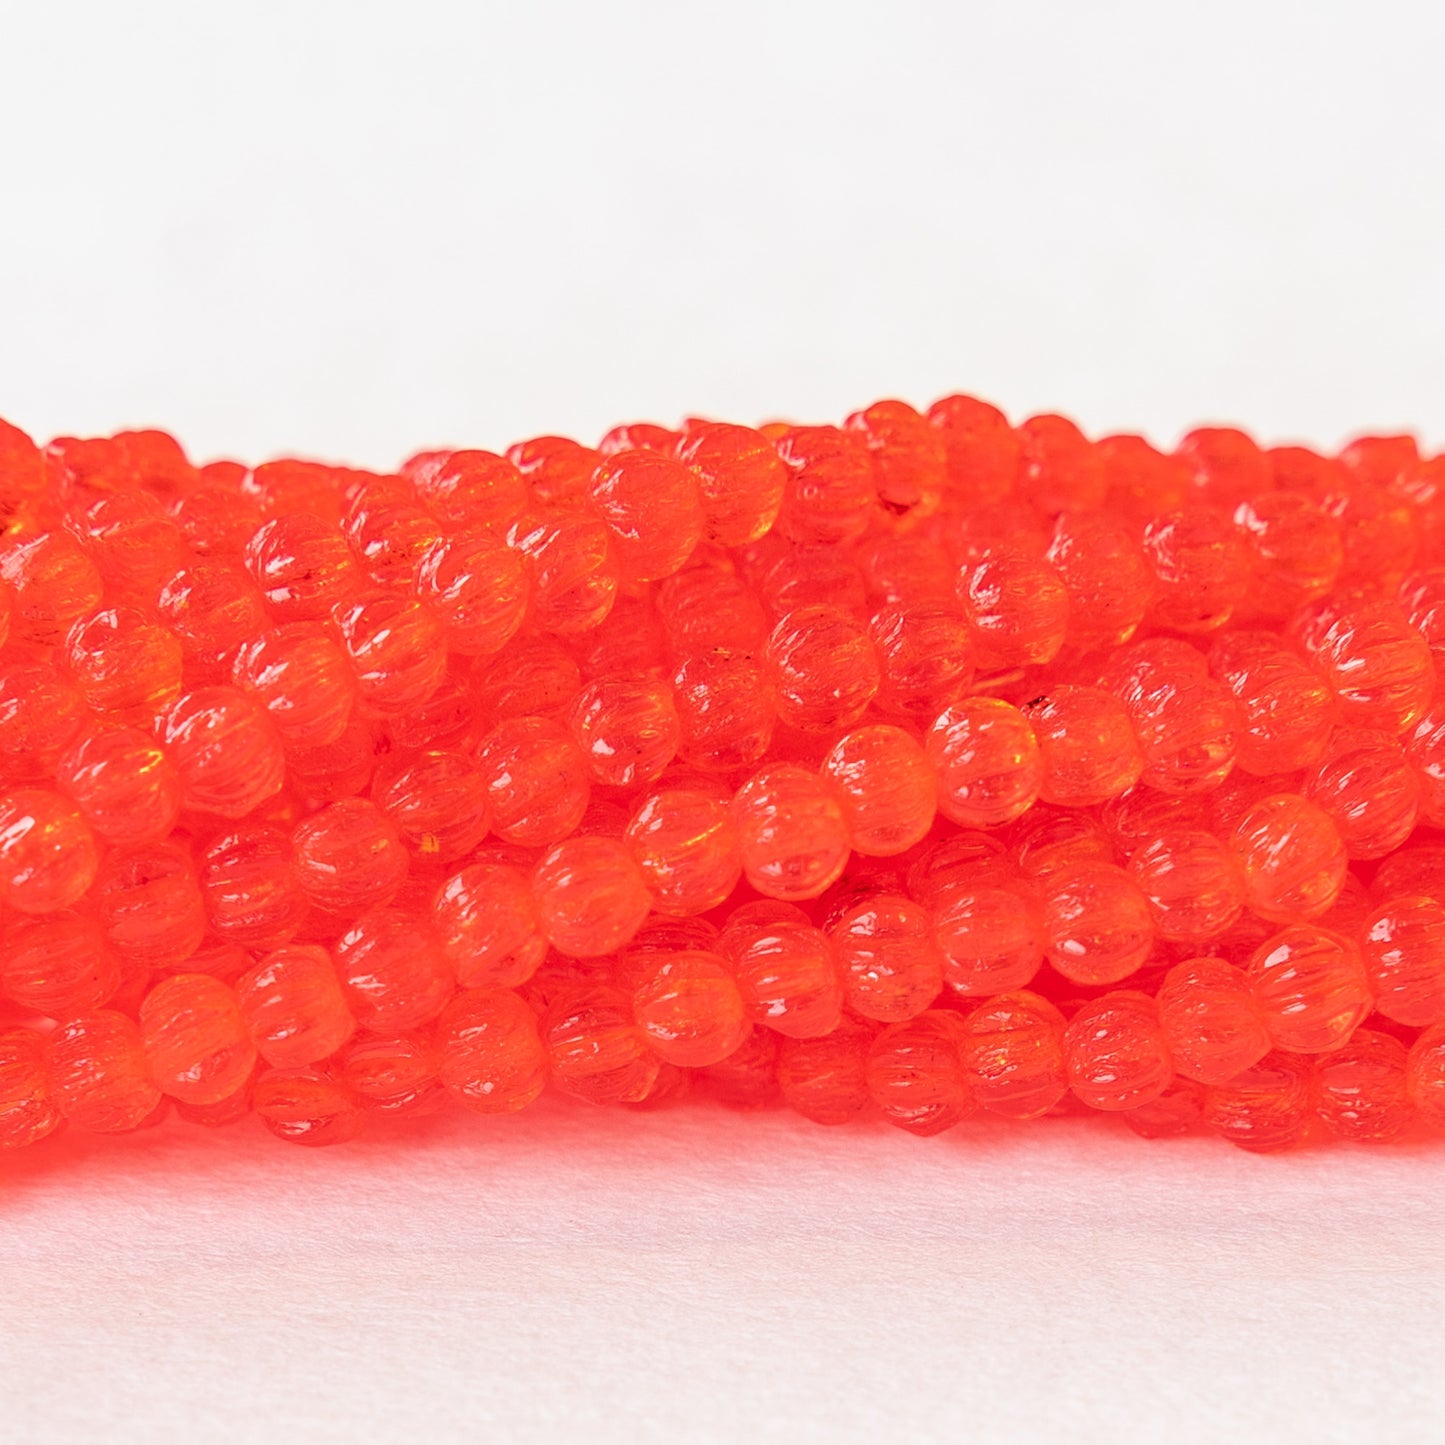 3mm Glass Melon Beads - Orange Hyacinth - 100 Beads